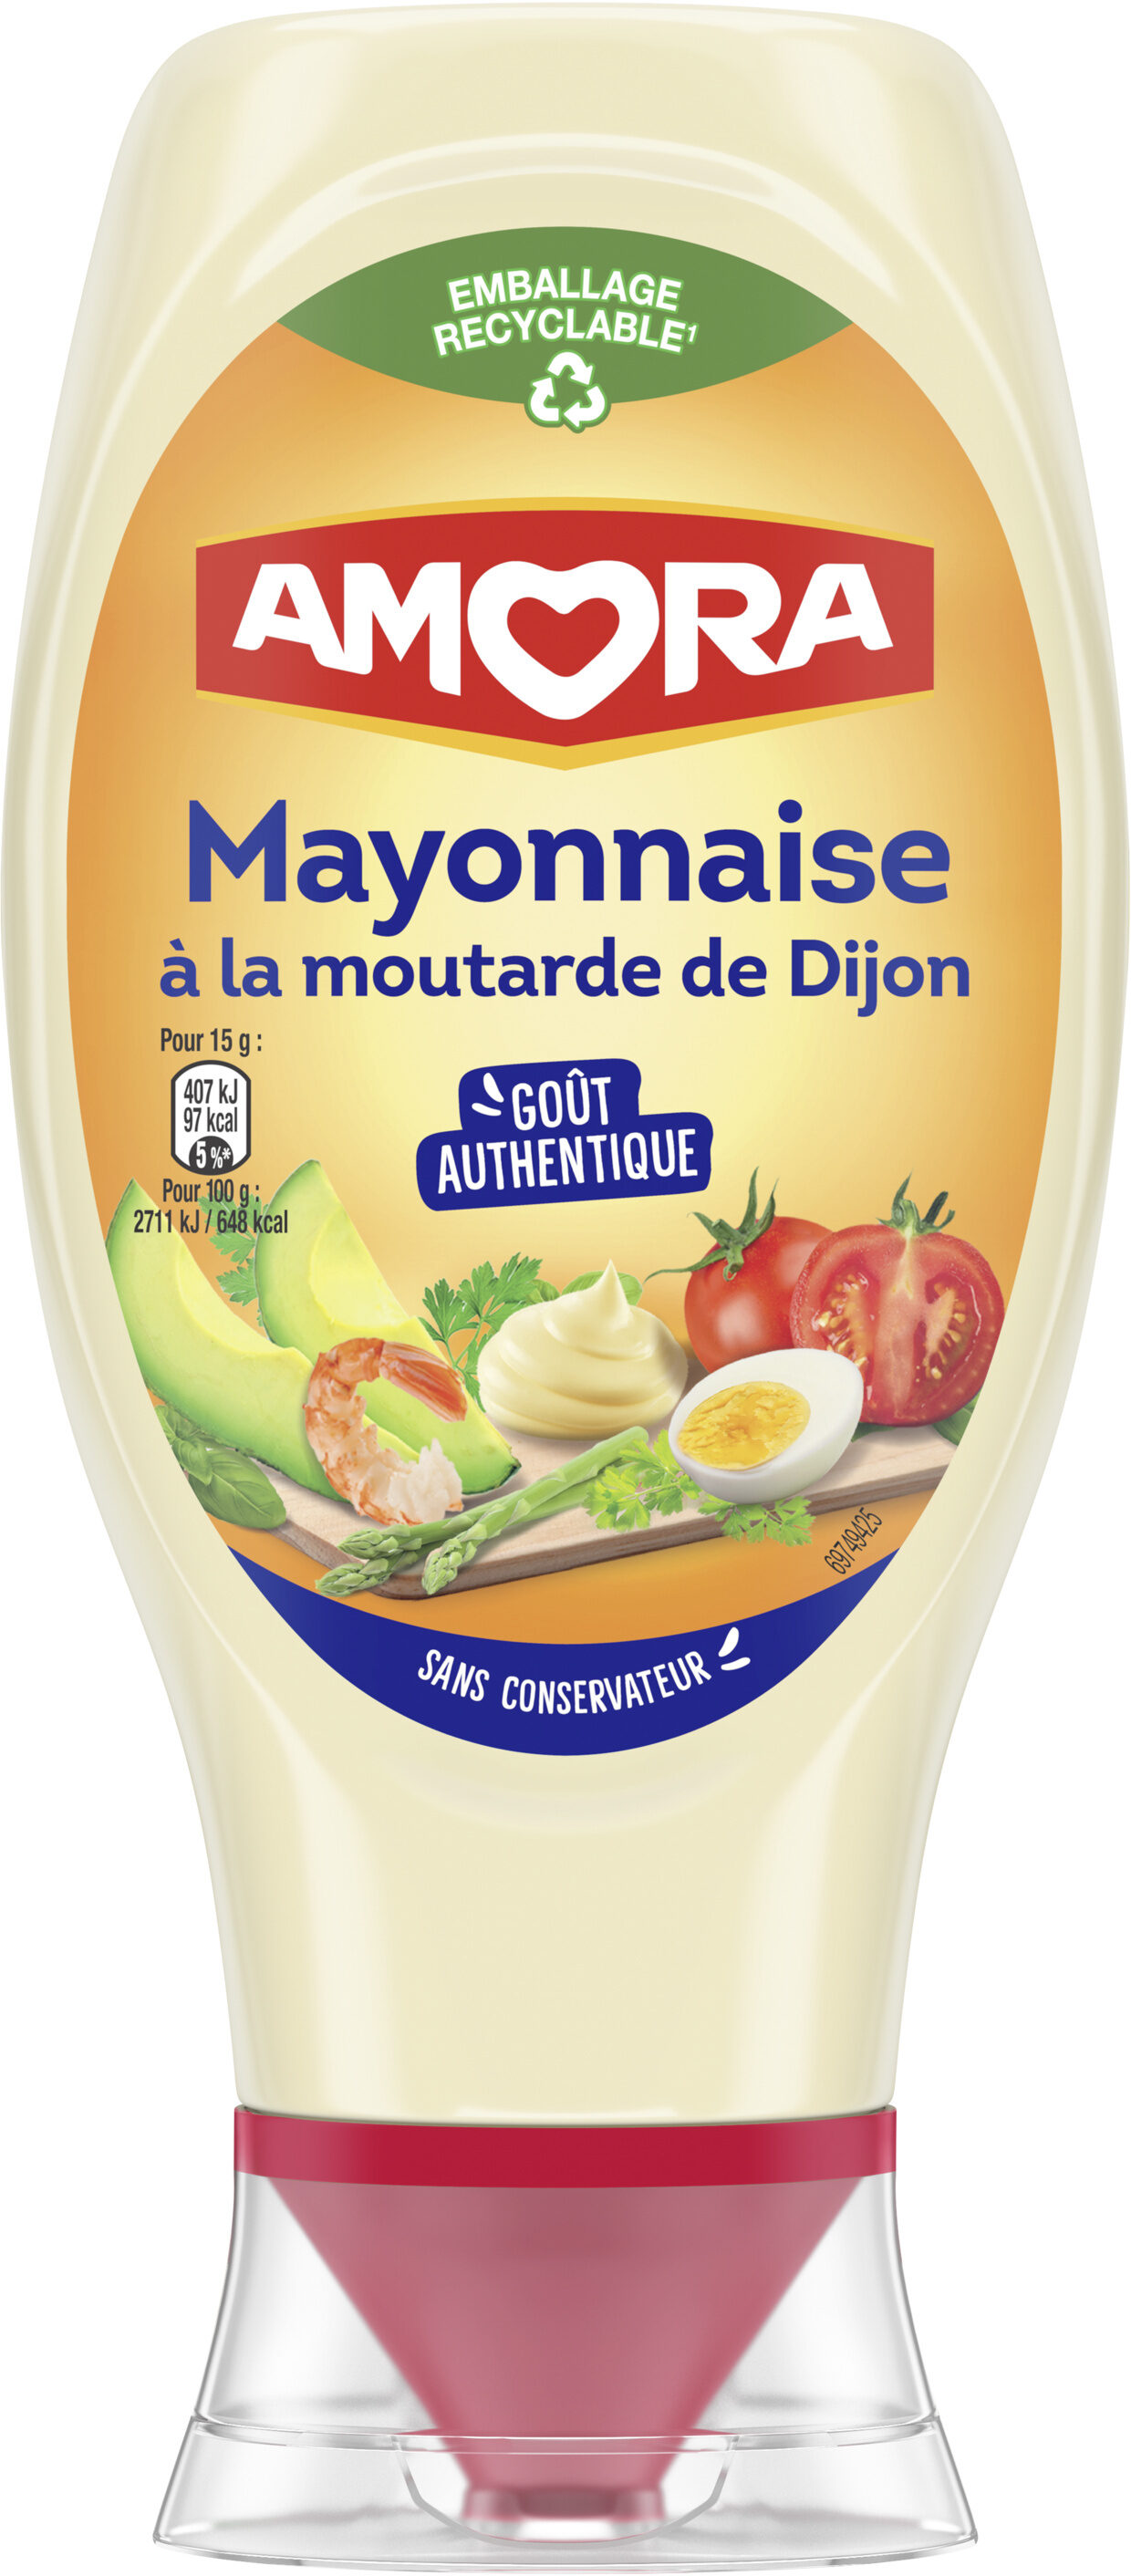 Amora Mayonnaise De Dijon Flacon Souple 415g - Produkt - fr